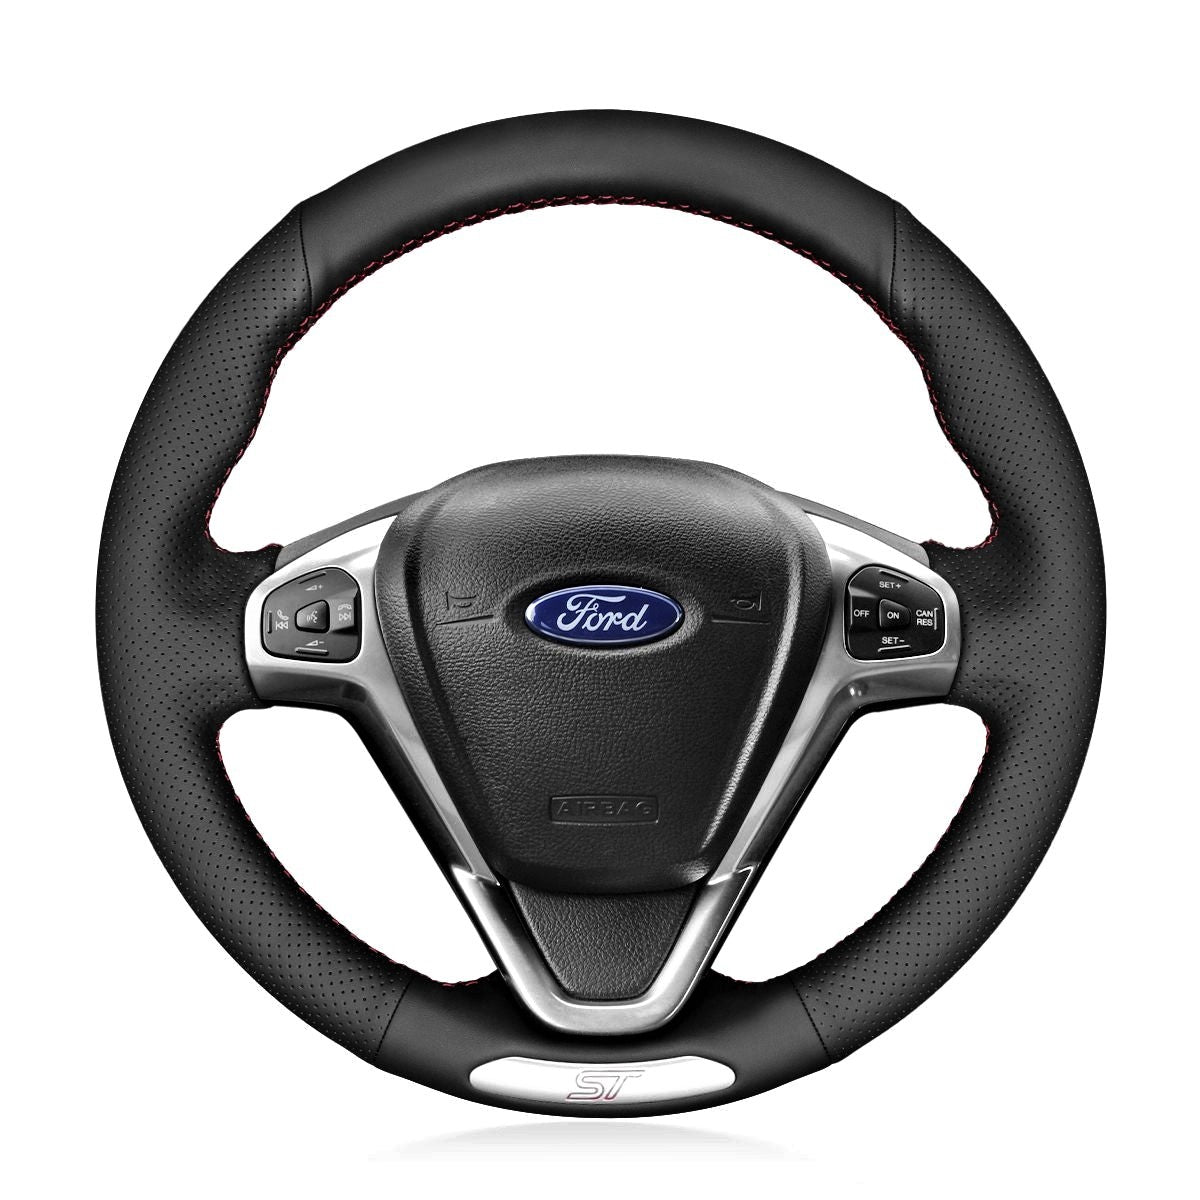 CarWorld Für Ford Fiesta 2013-2017, Auto-Lenkrad